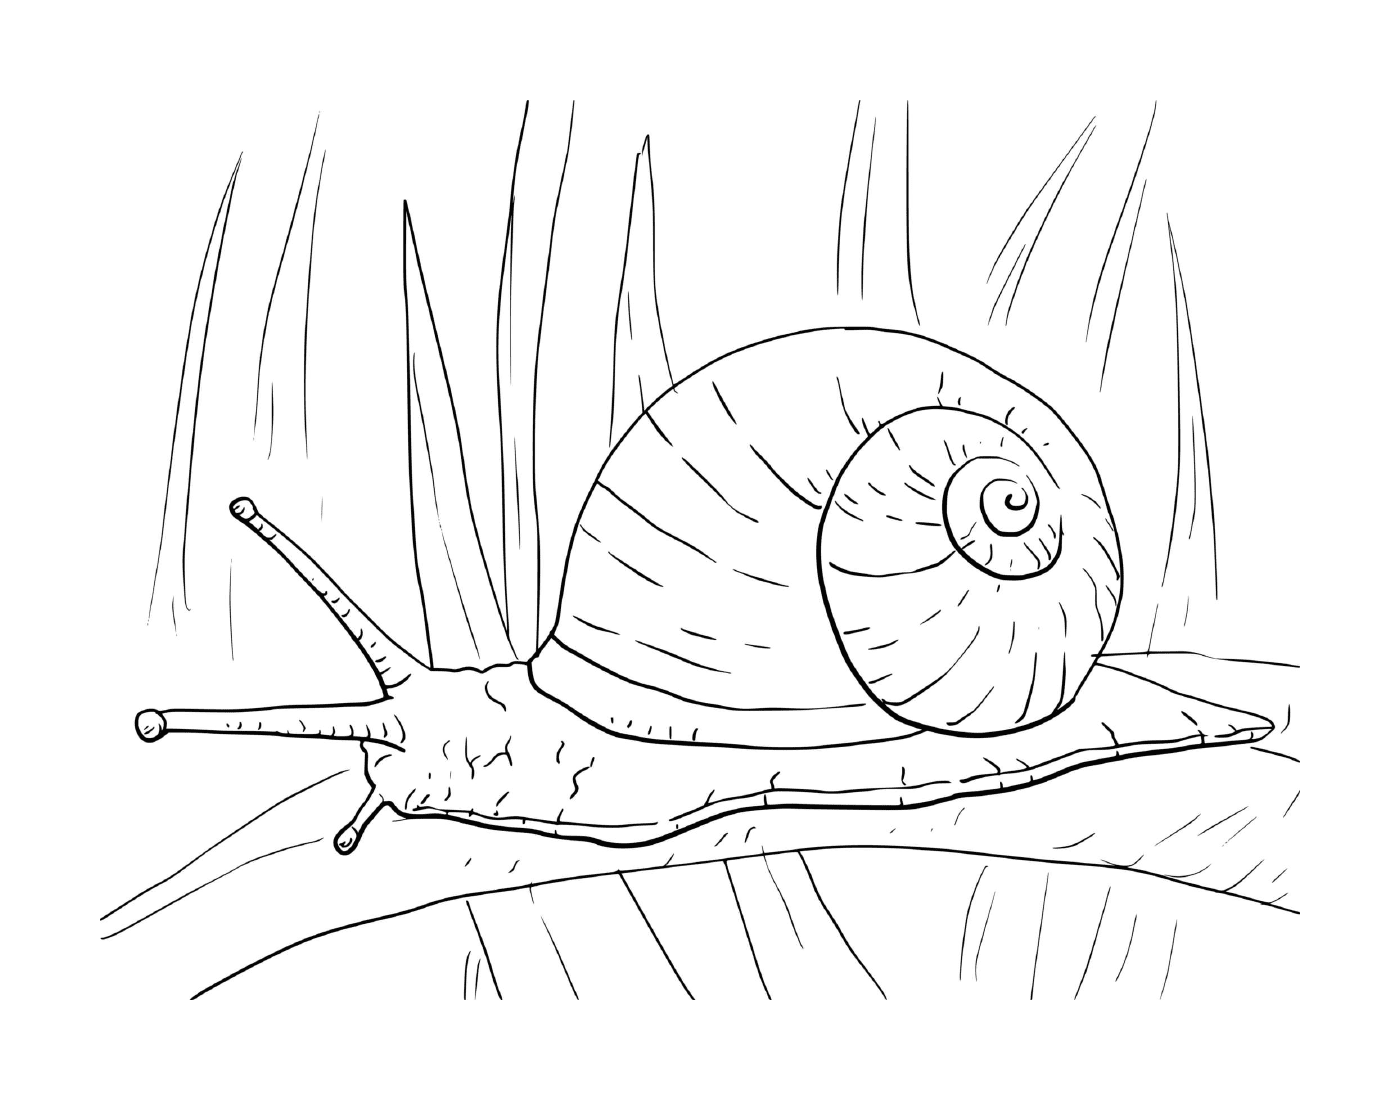  A snail swinging on a branch 